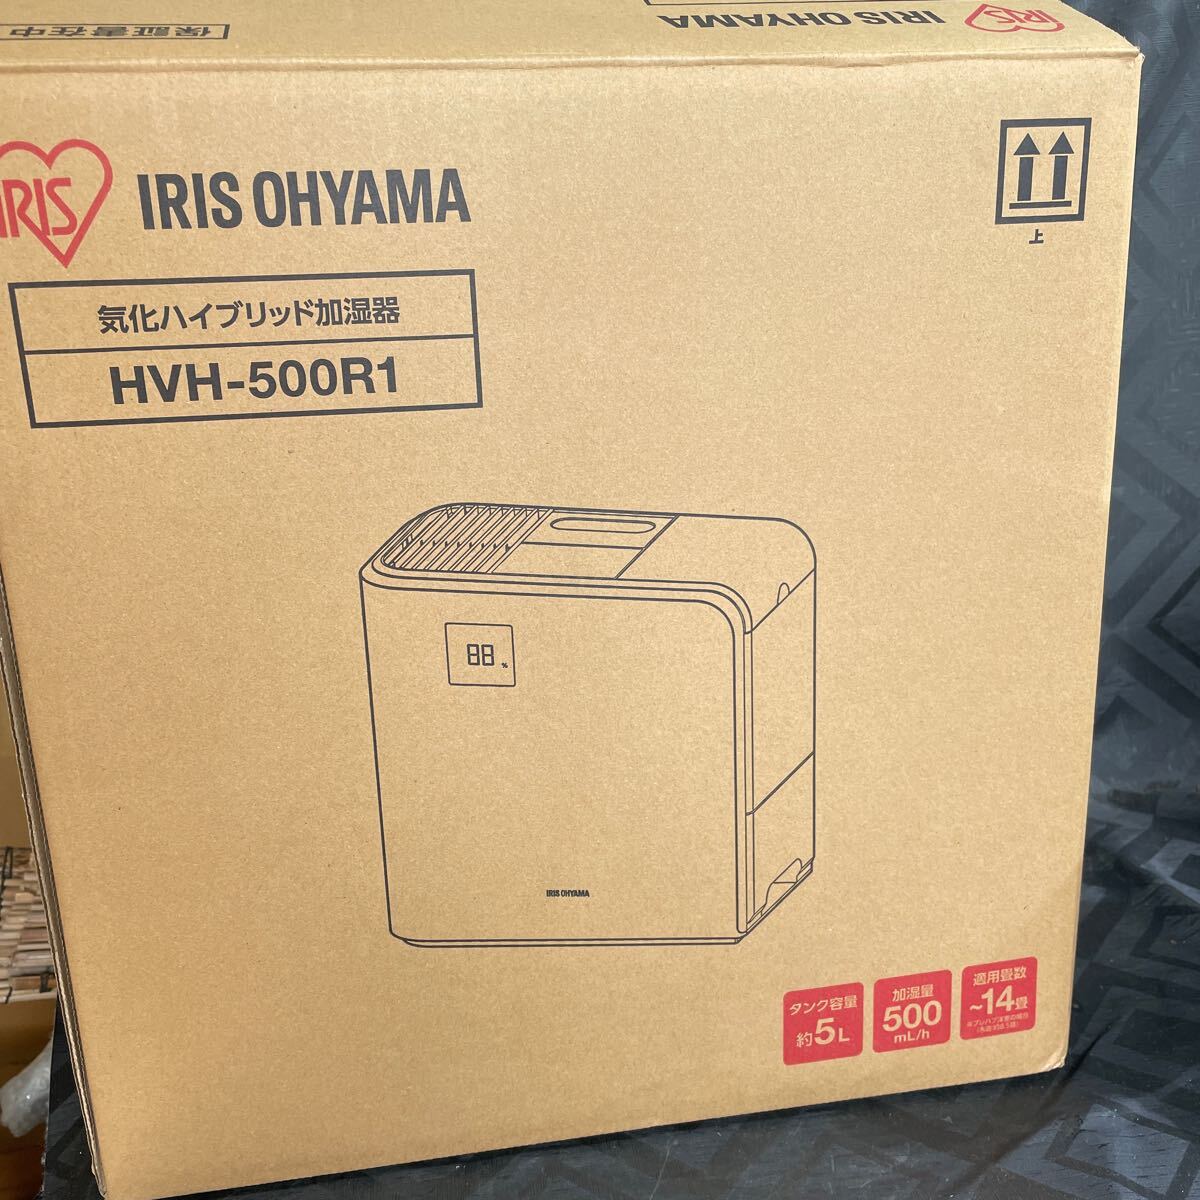  Iris o-yama.. hybrid type humidifier 700ml HVH-500R1 white .. hybrid humidifier operation verification settled 